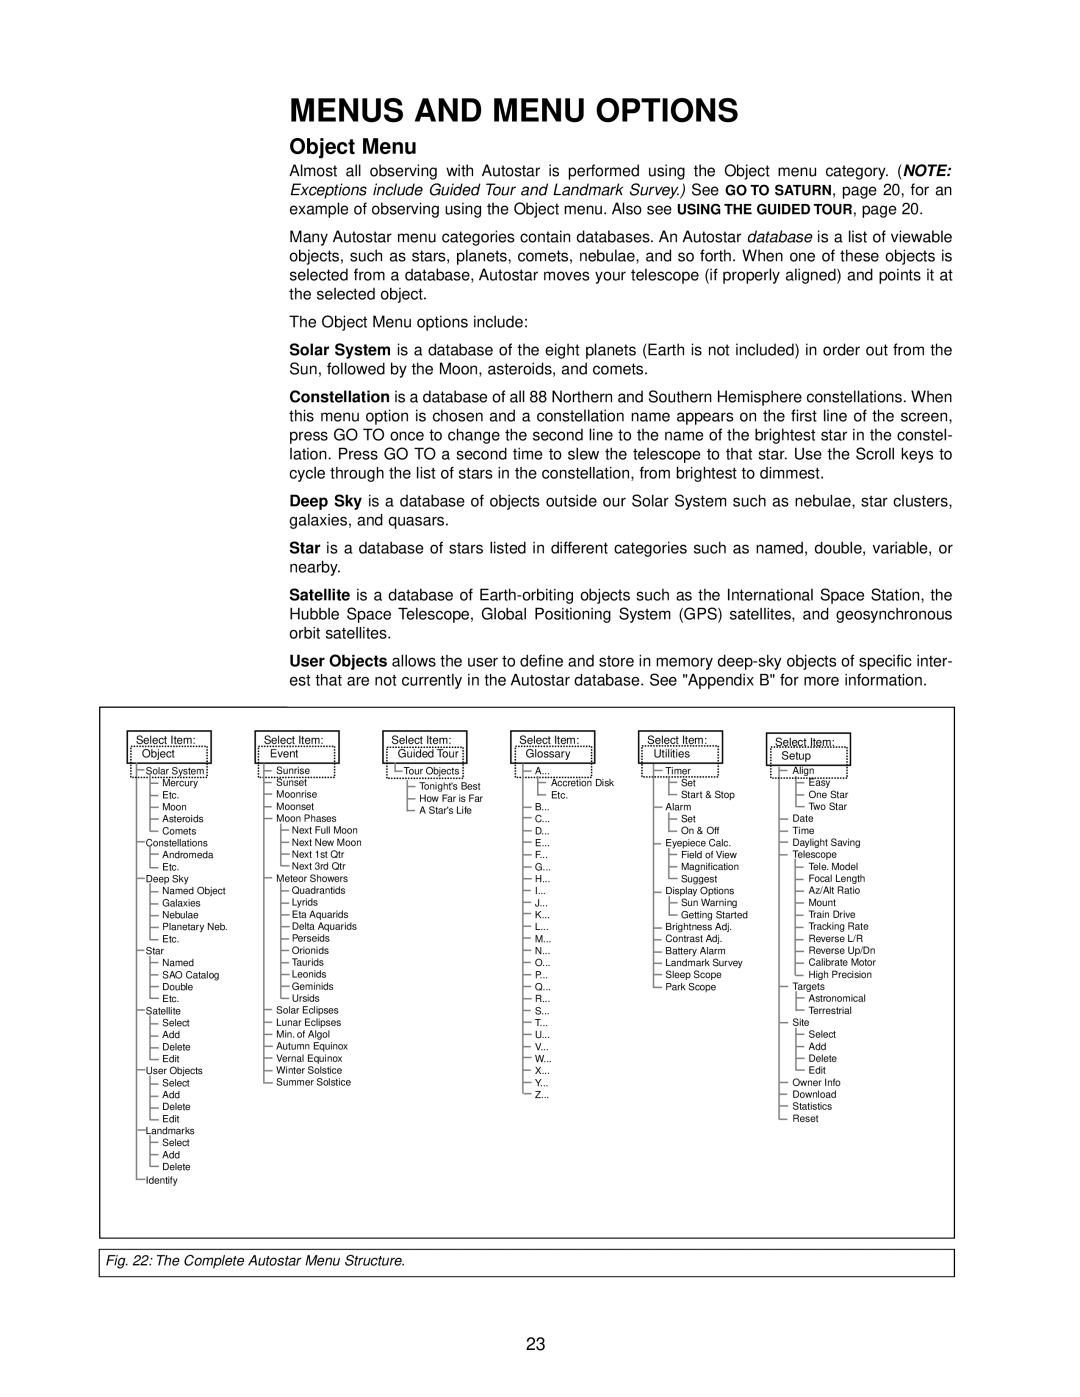 Meade DS-2000 instruction manual Menus And Menu Options, Object Menu 